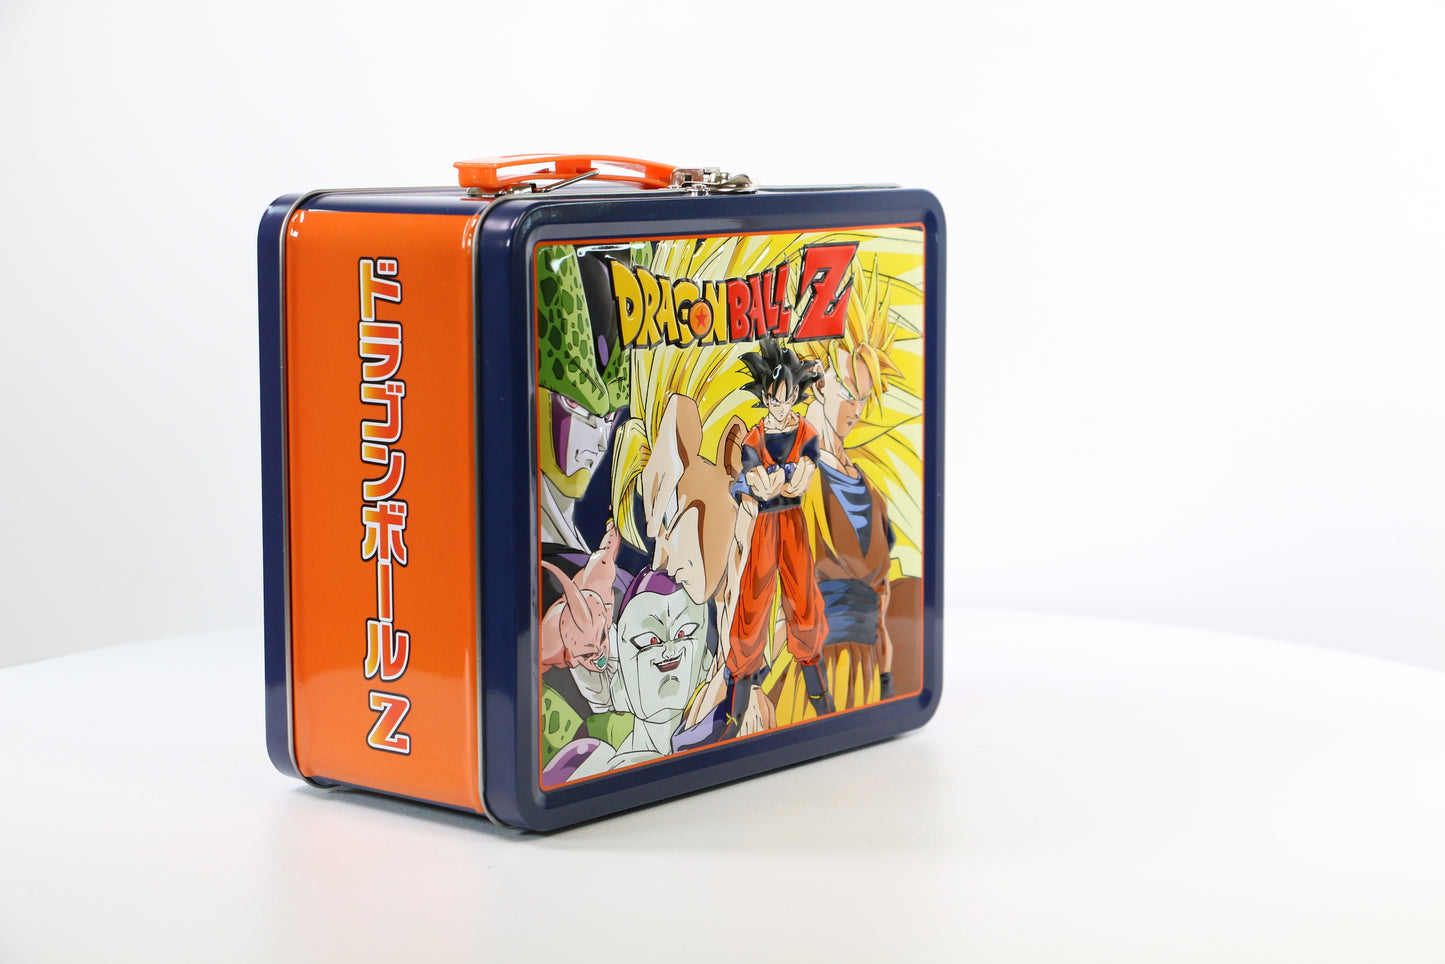 Tin Titans - Dragon Ball Z Son Goku Lunch Box w/ Beverage Container